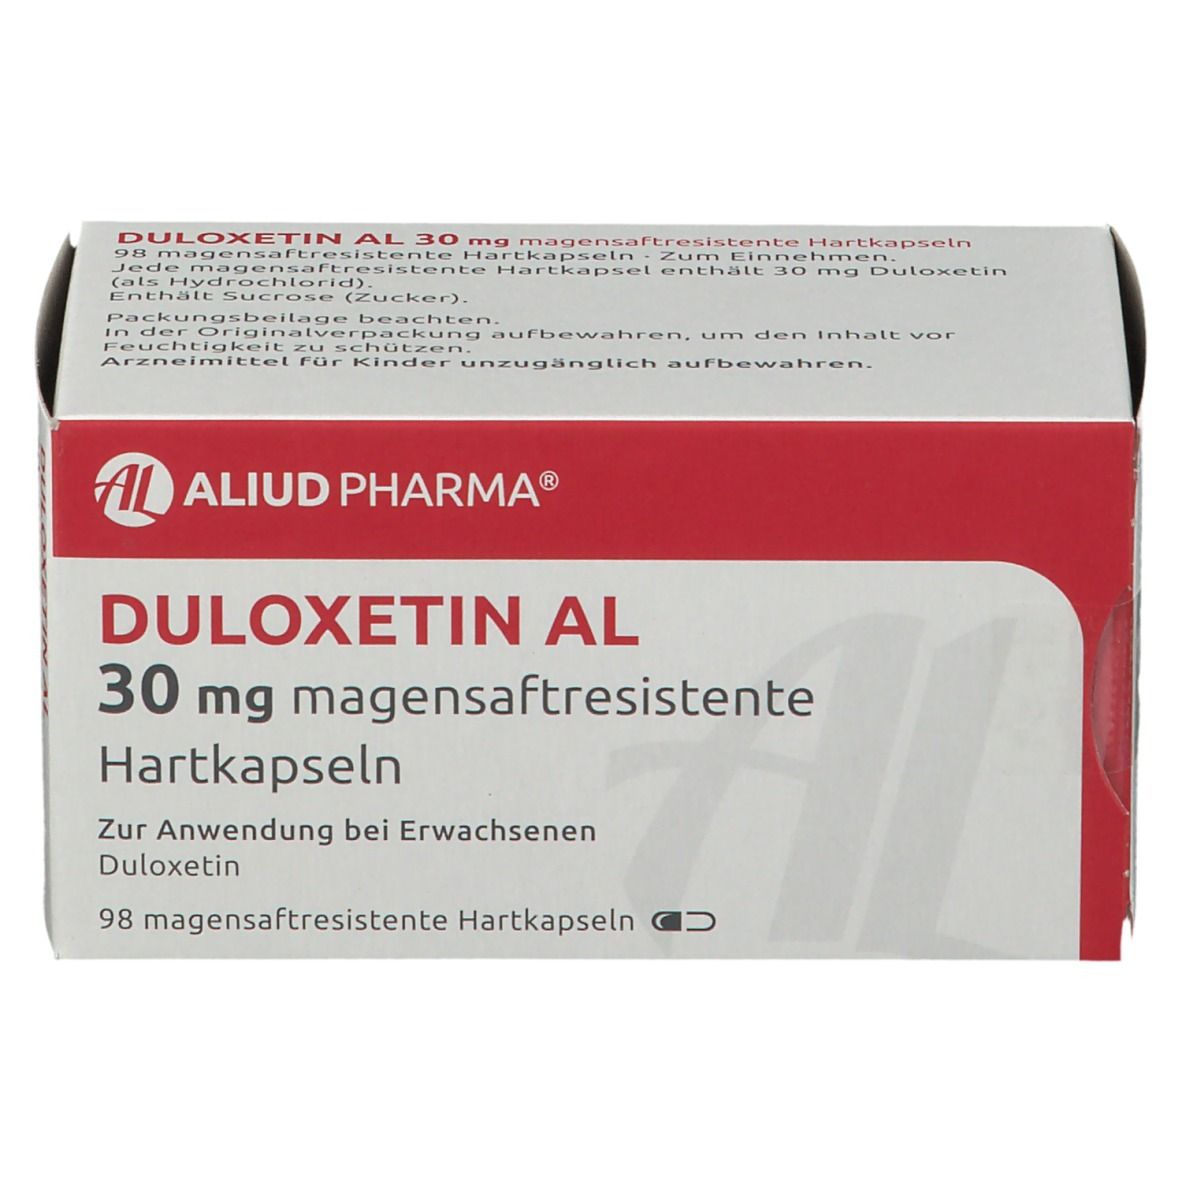 Duloxetin AL 30 mg